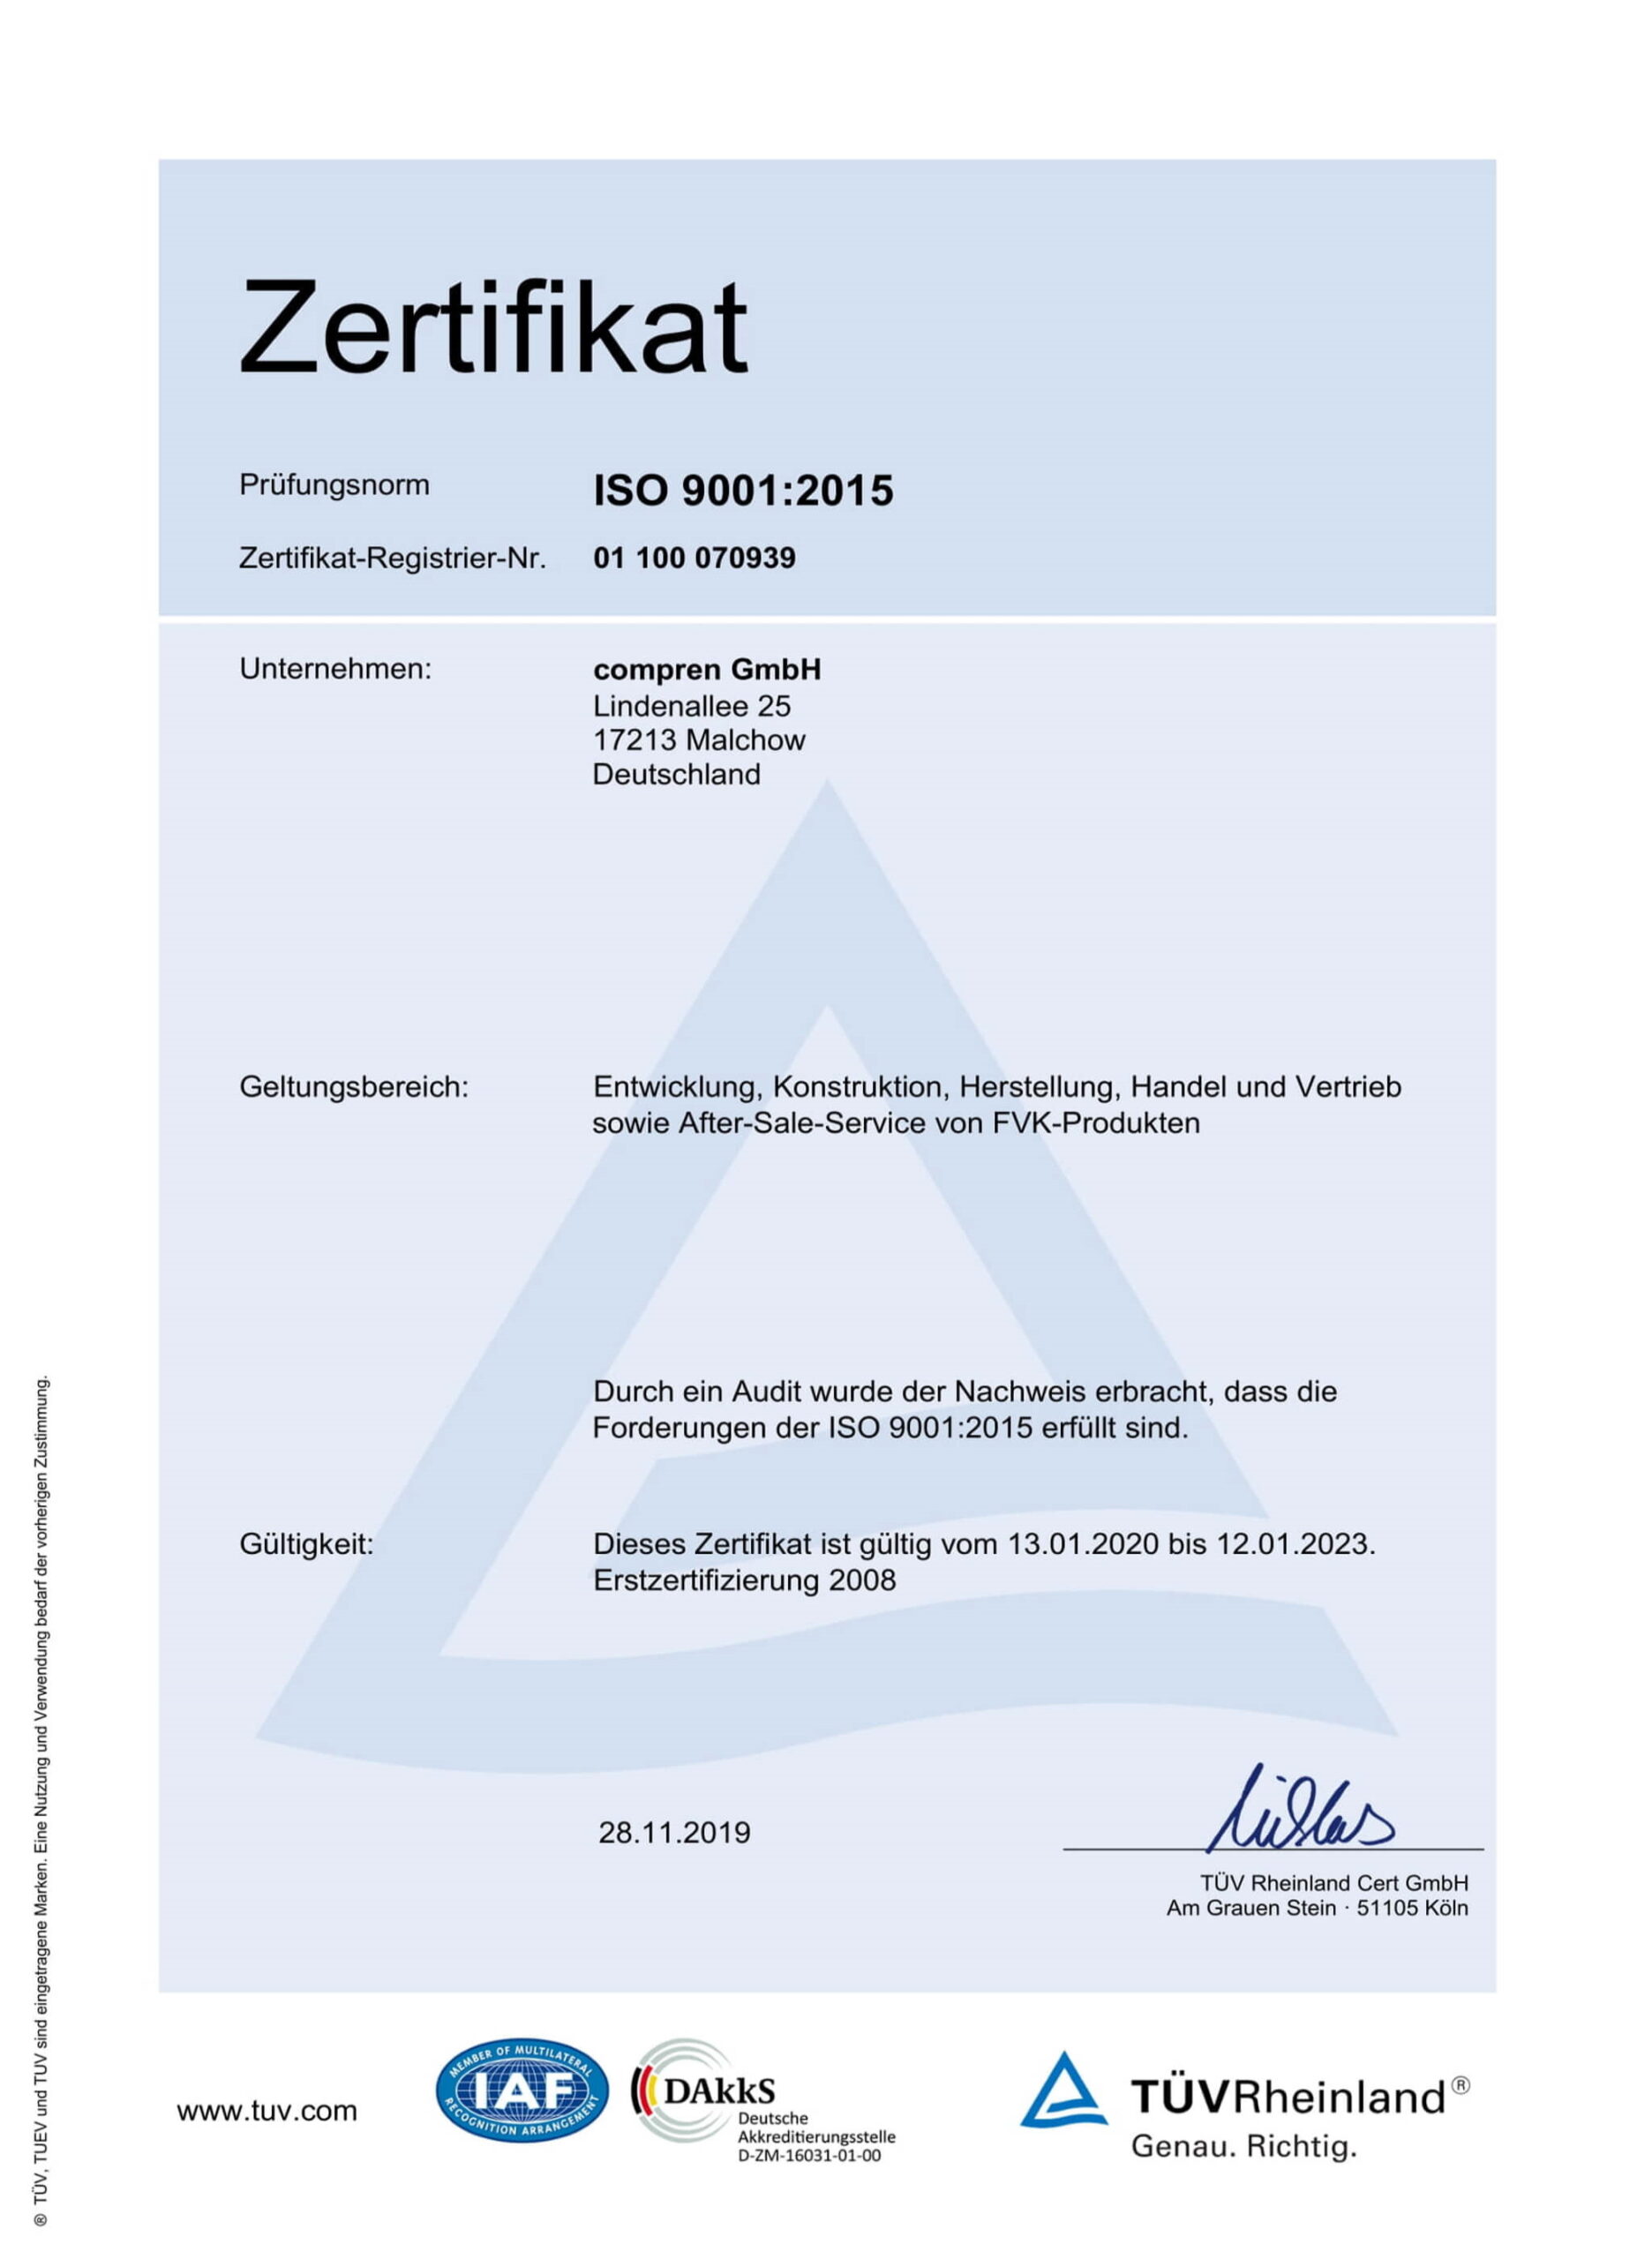 Zertifikat-Qualitaetsmanagement-ISO9001